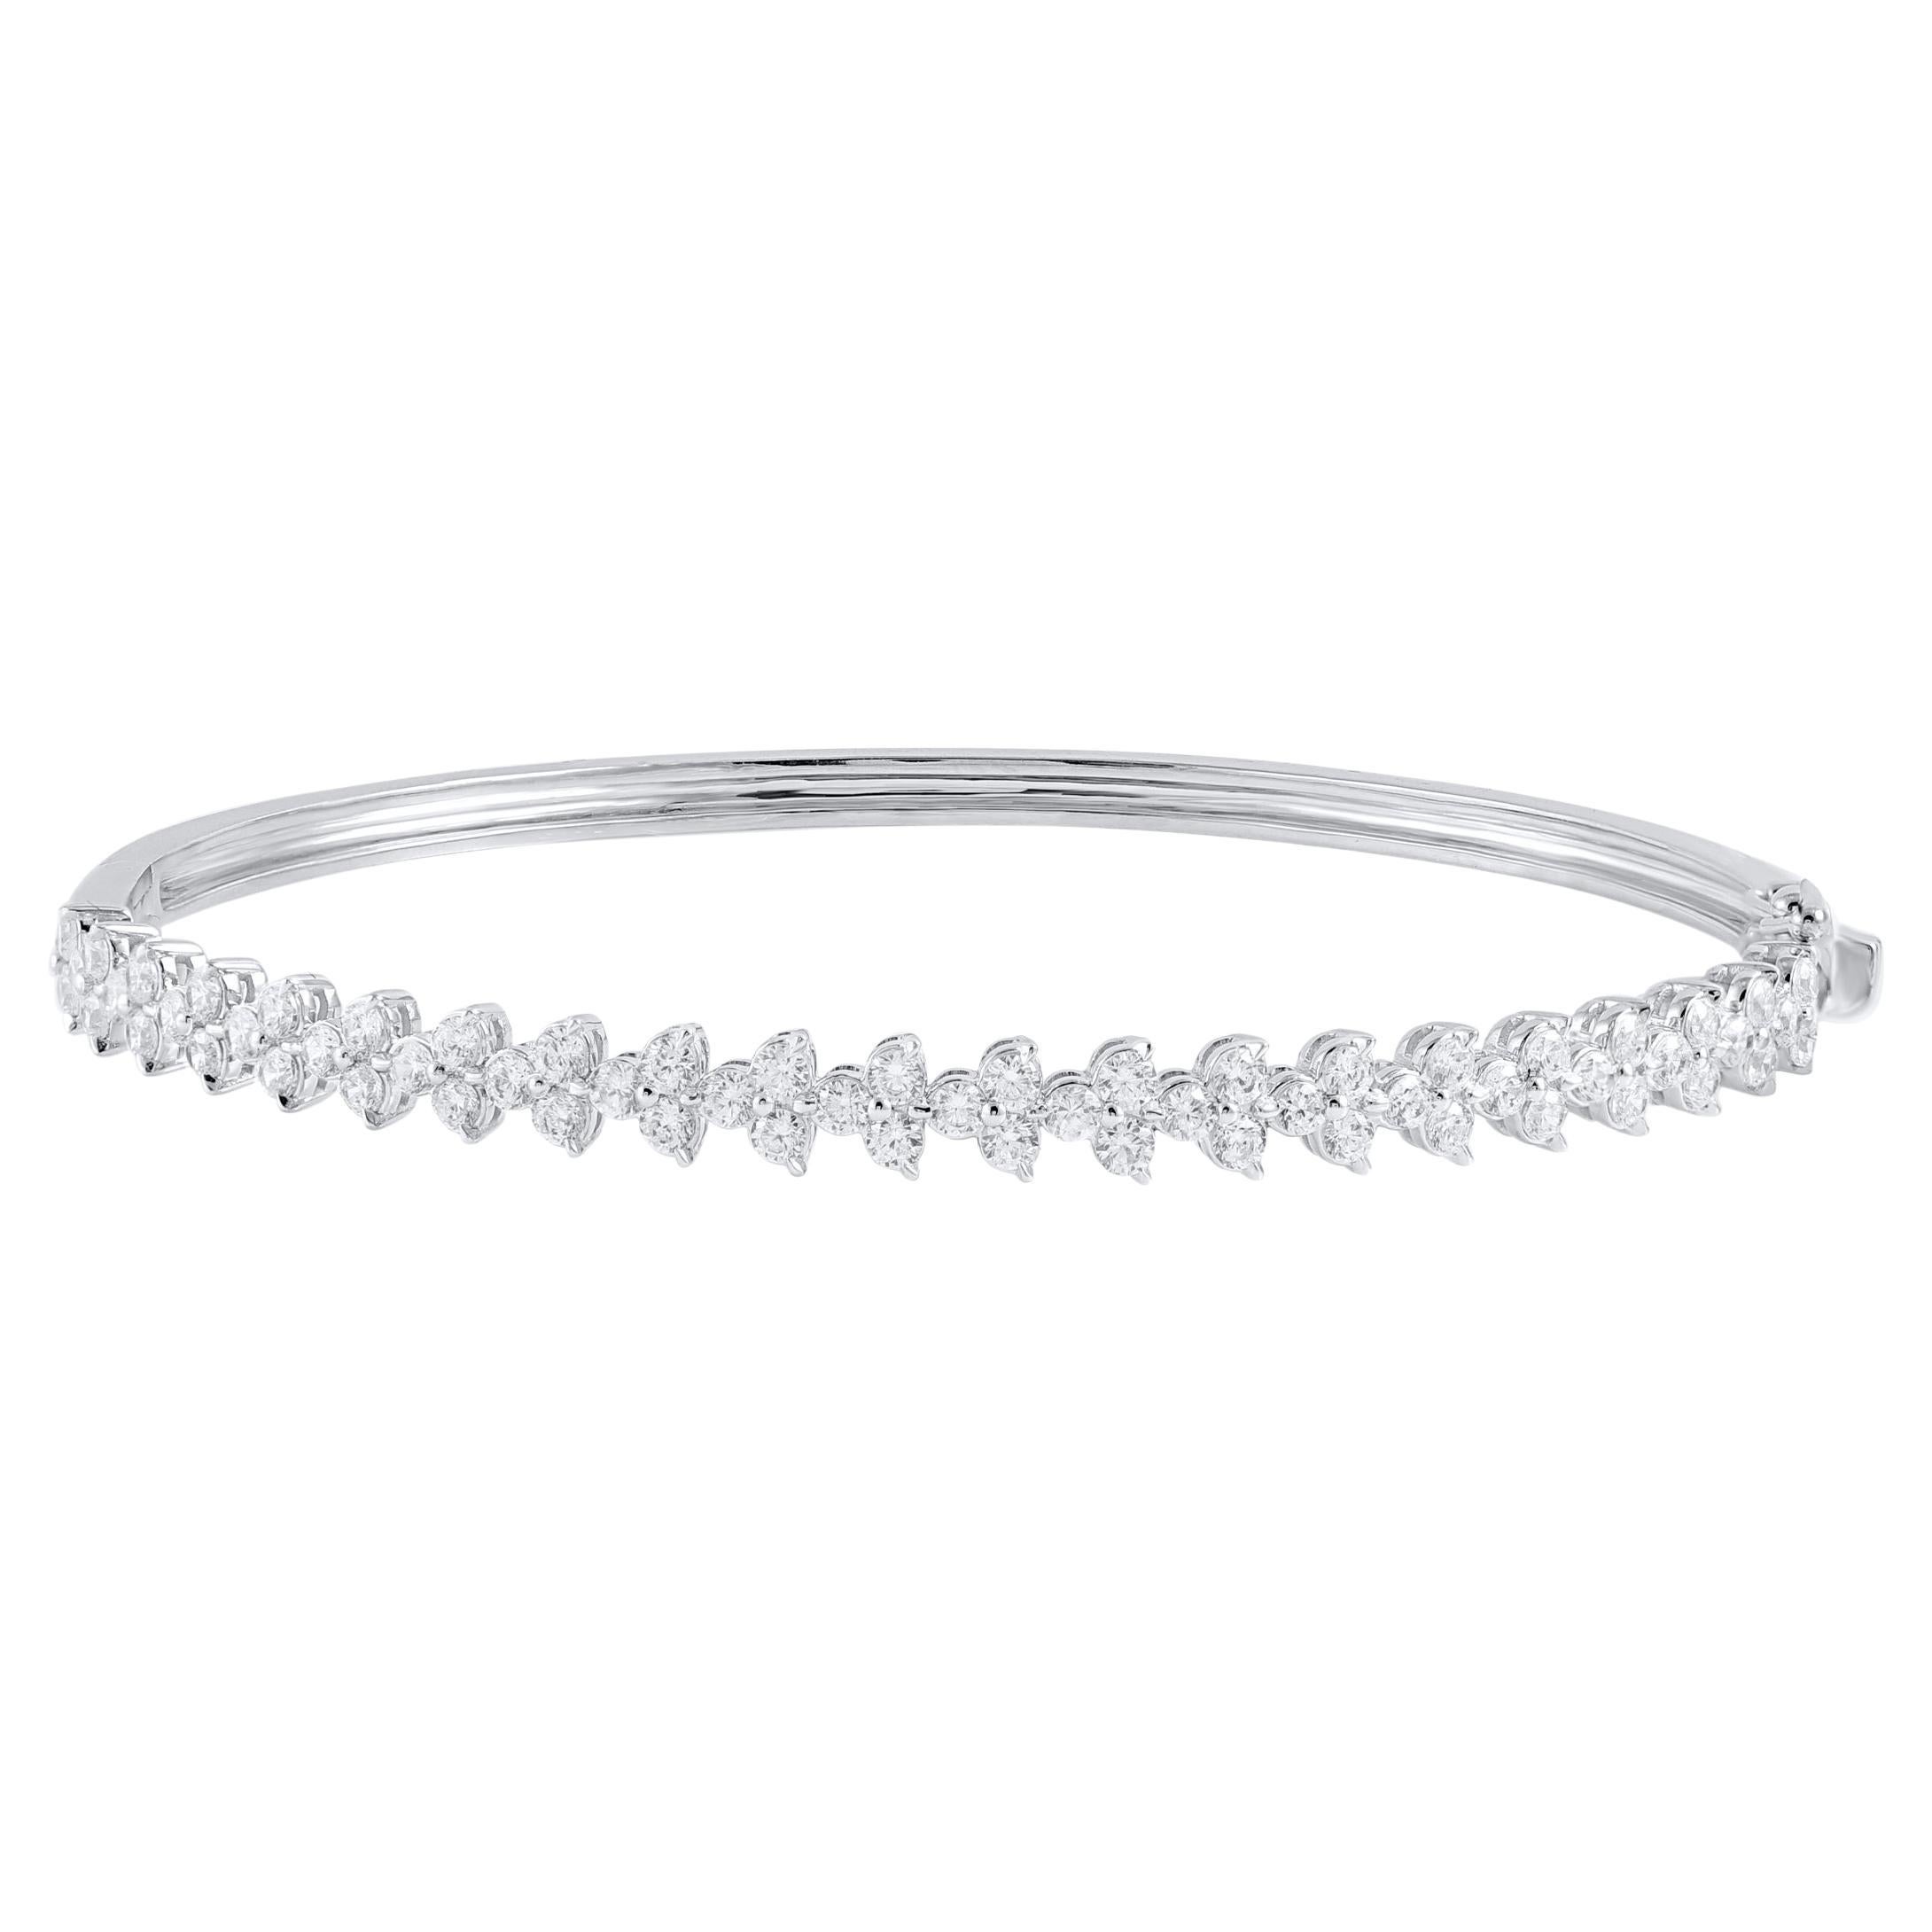 TJD 2.0 Carat Round Brilliant Cut Diamond Bangle Bracelet in 14KT White Gold For Sale